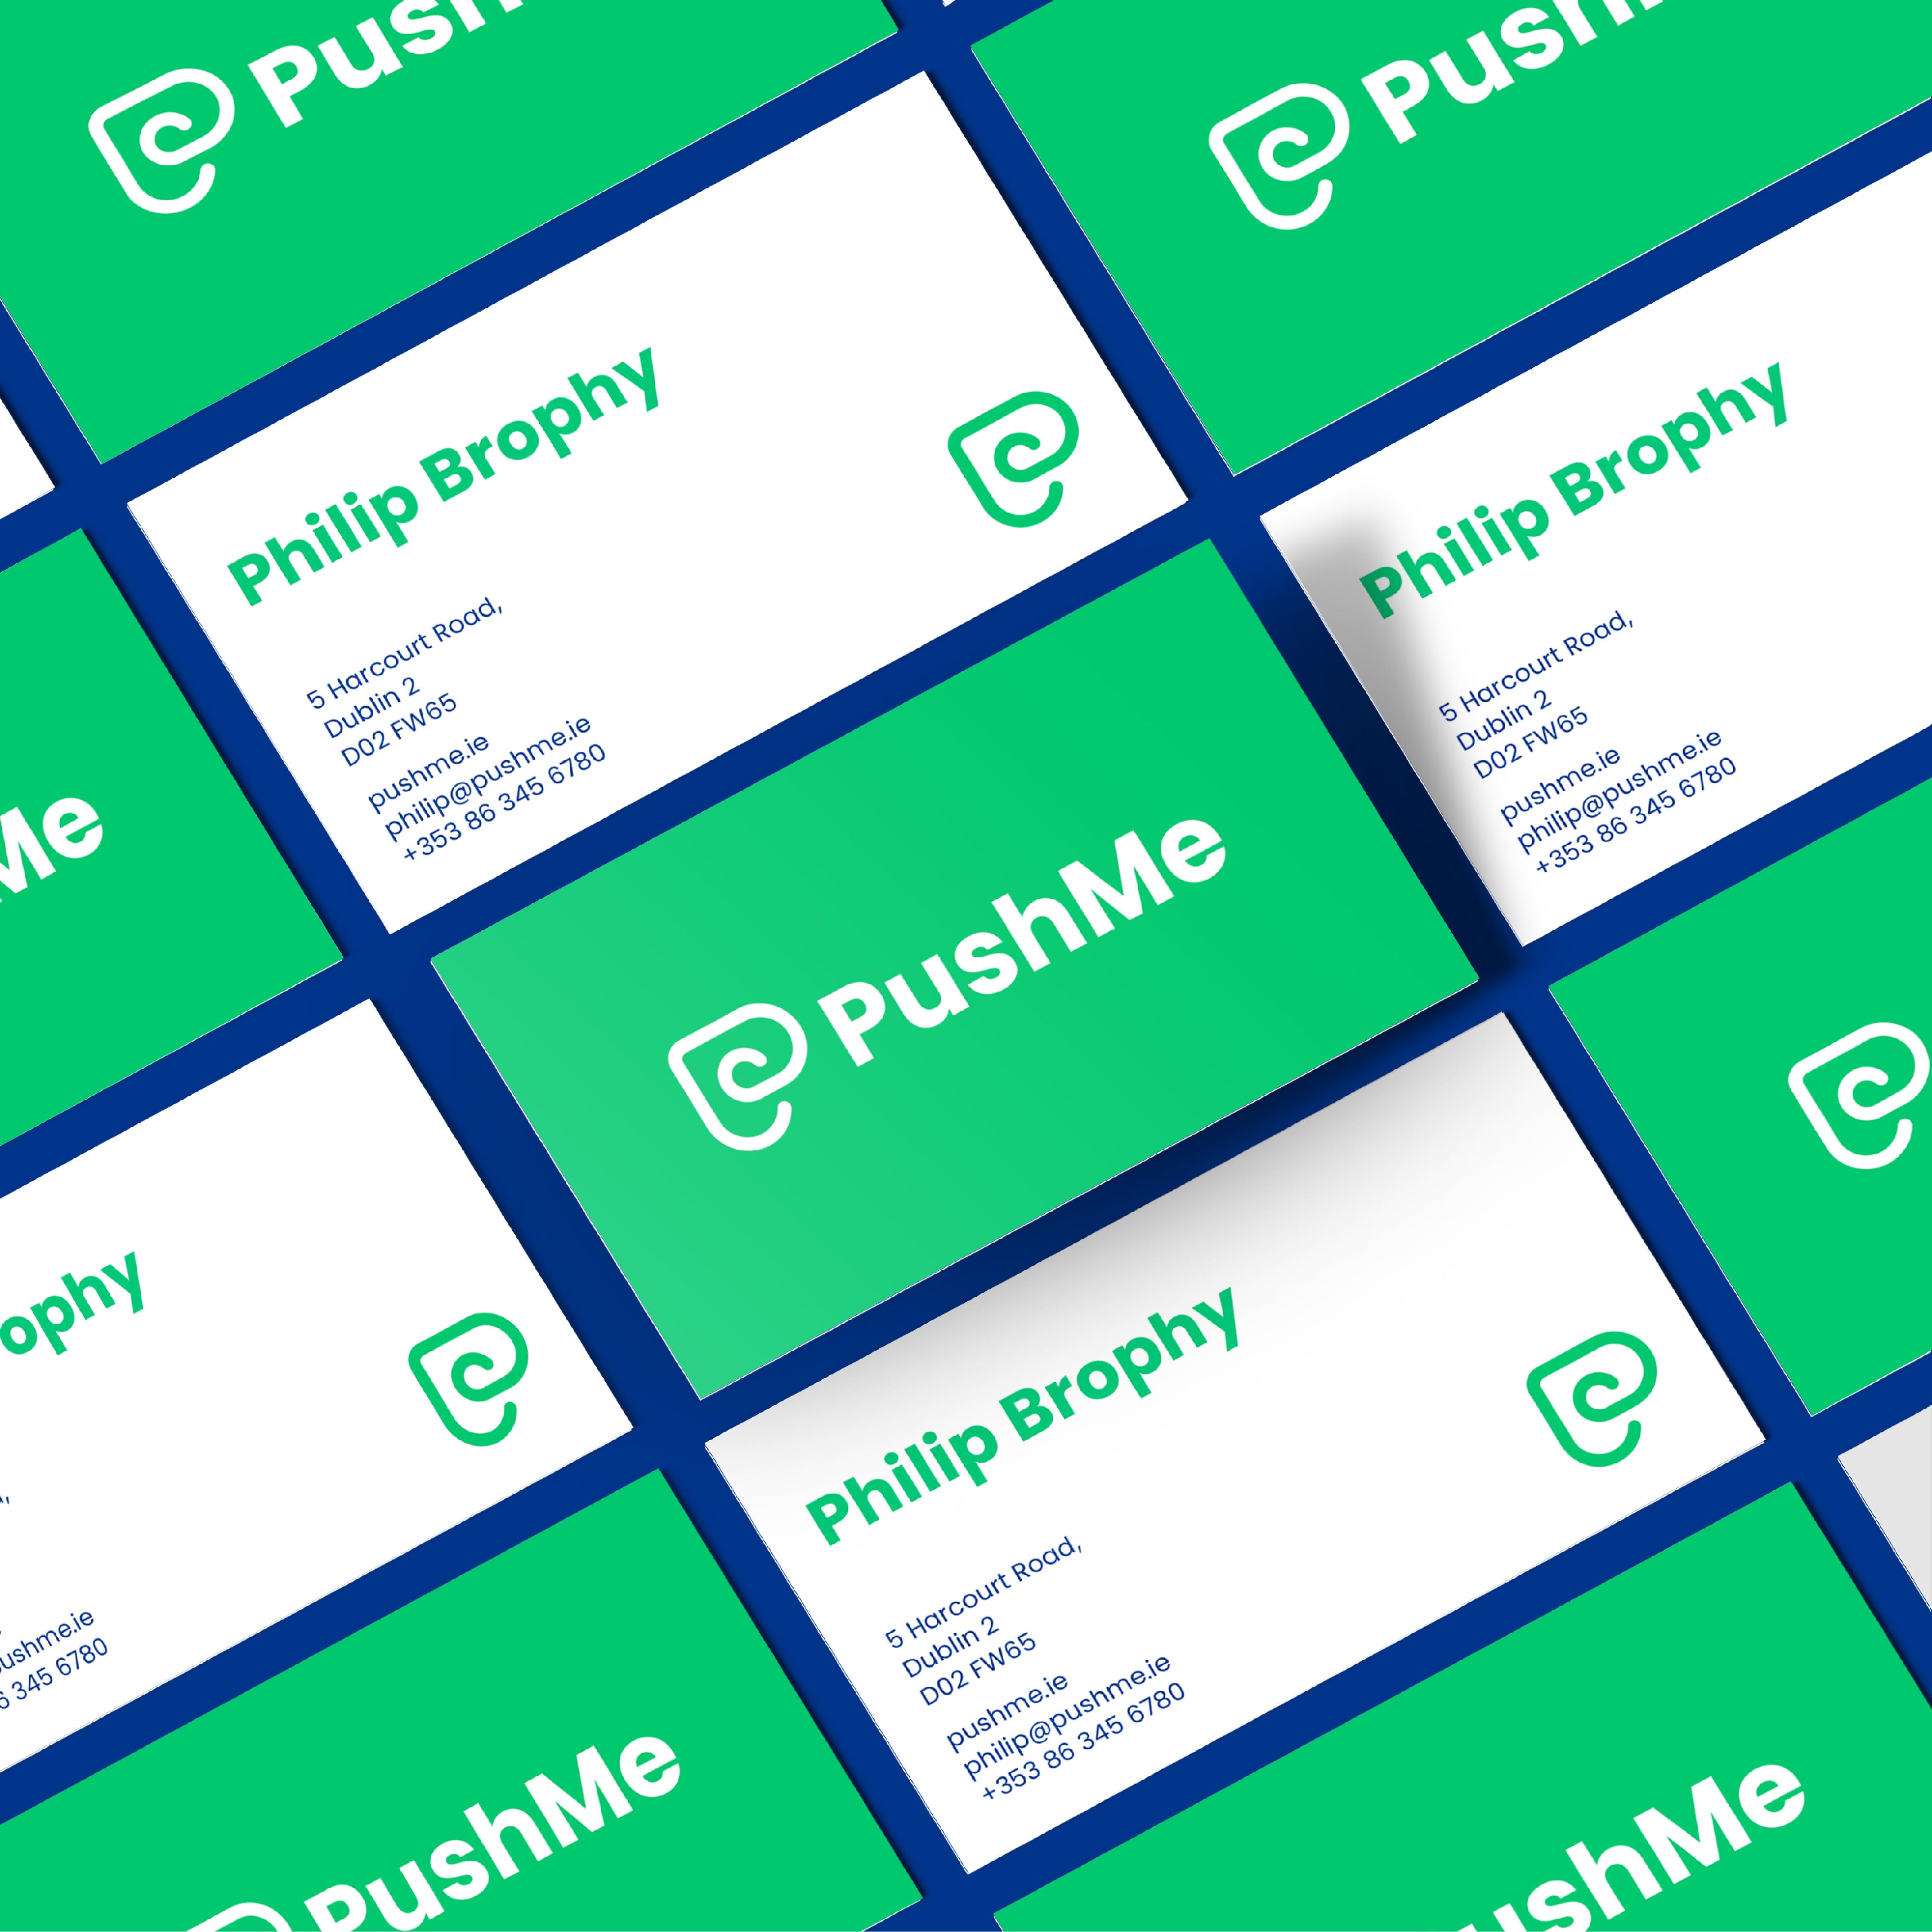 PushMe Brand Identity Designed by Michael Sloane